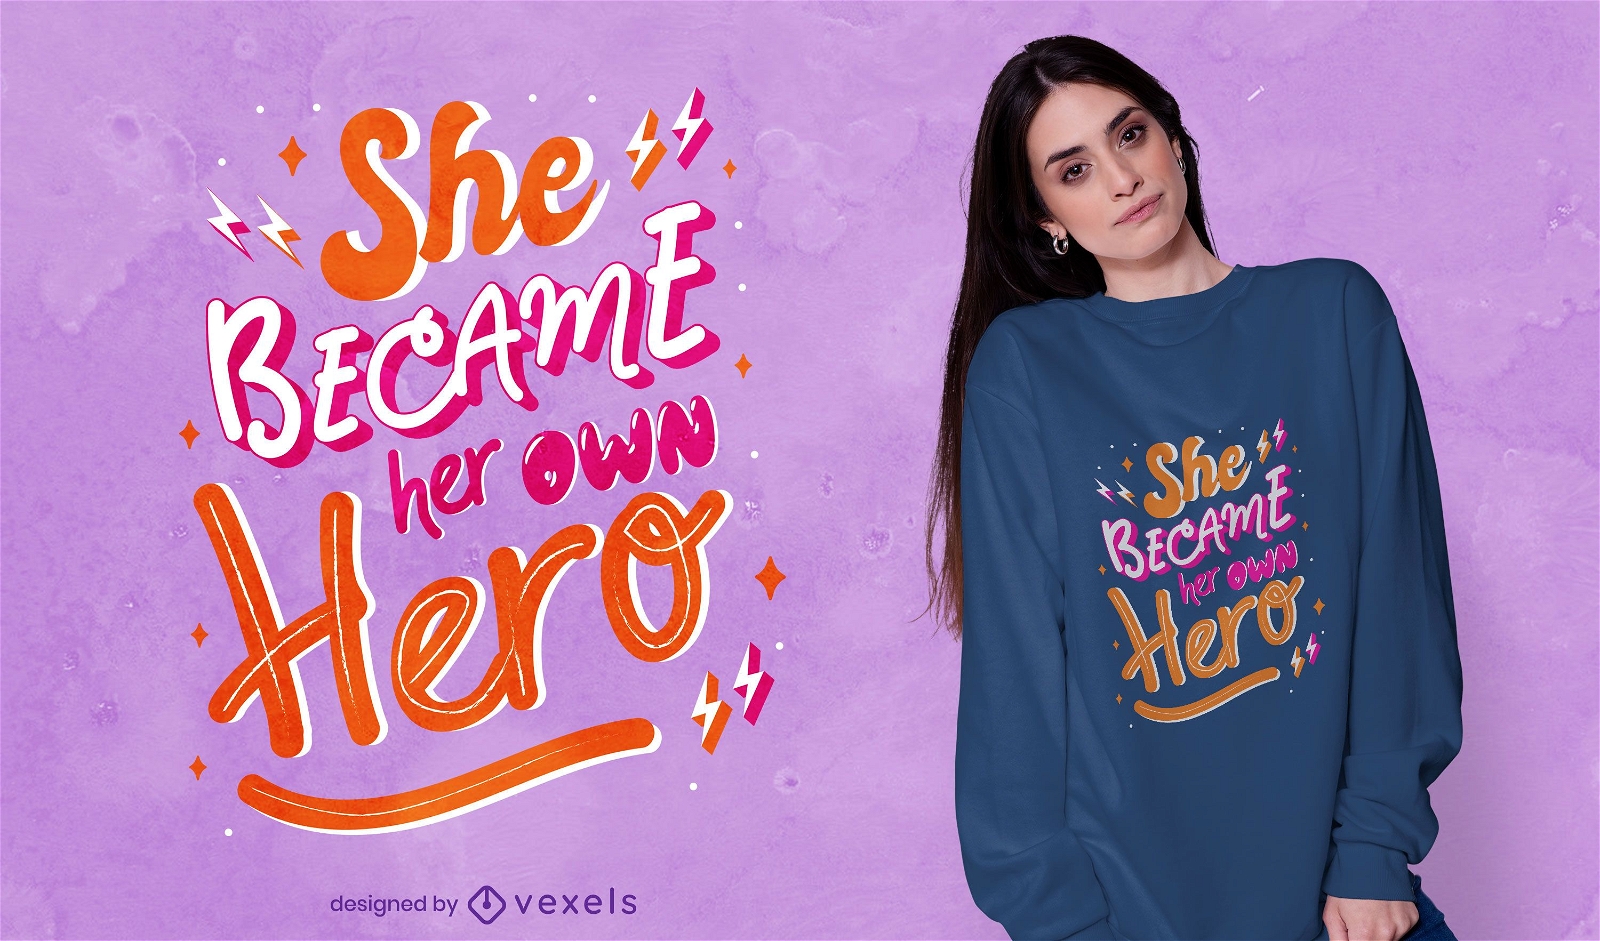 Her own hero t-shirt design